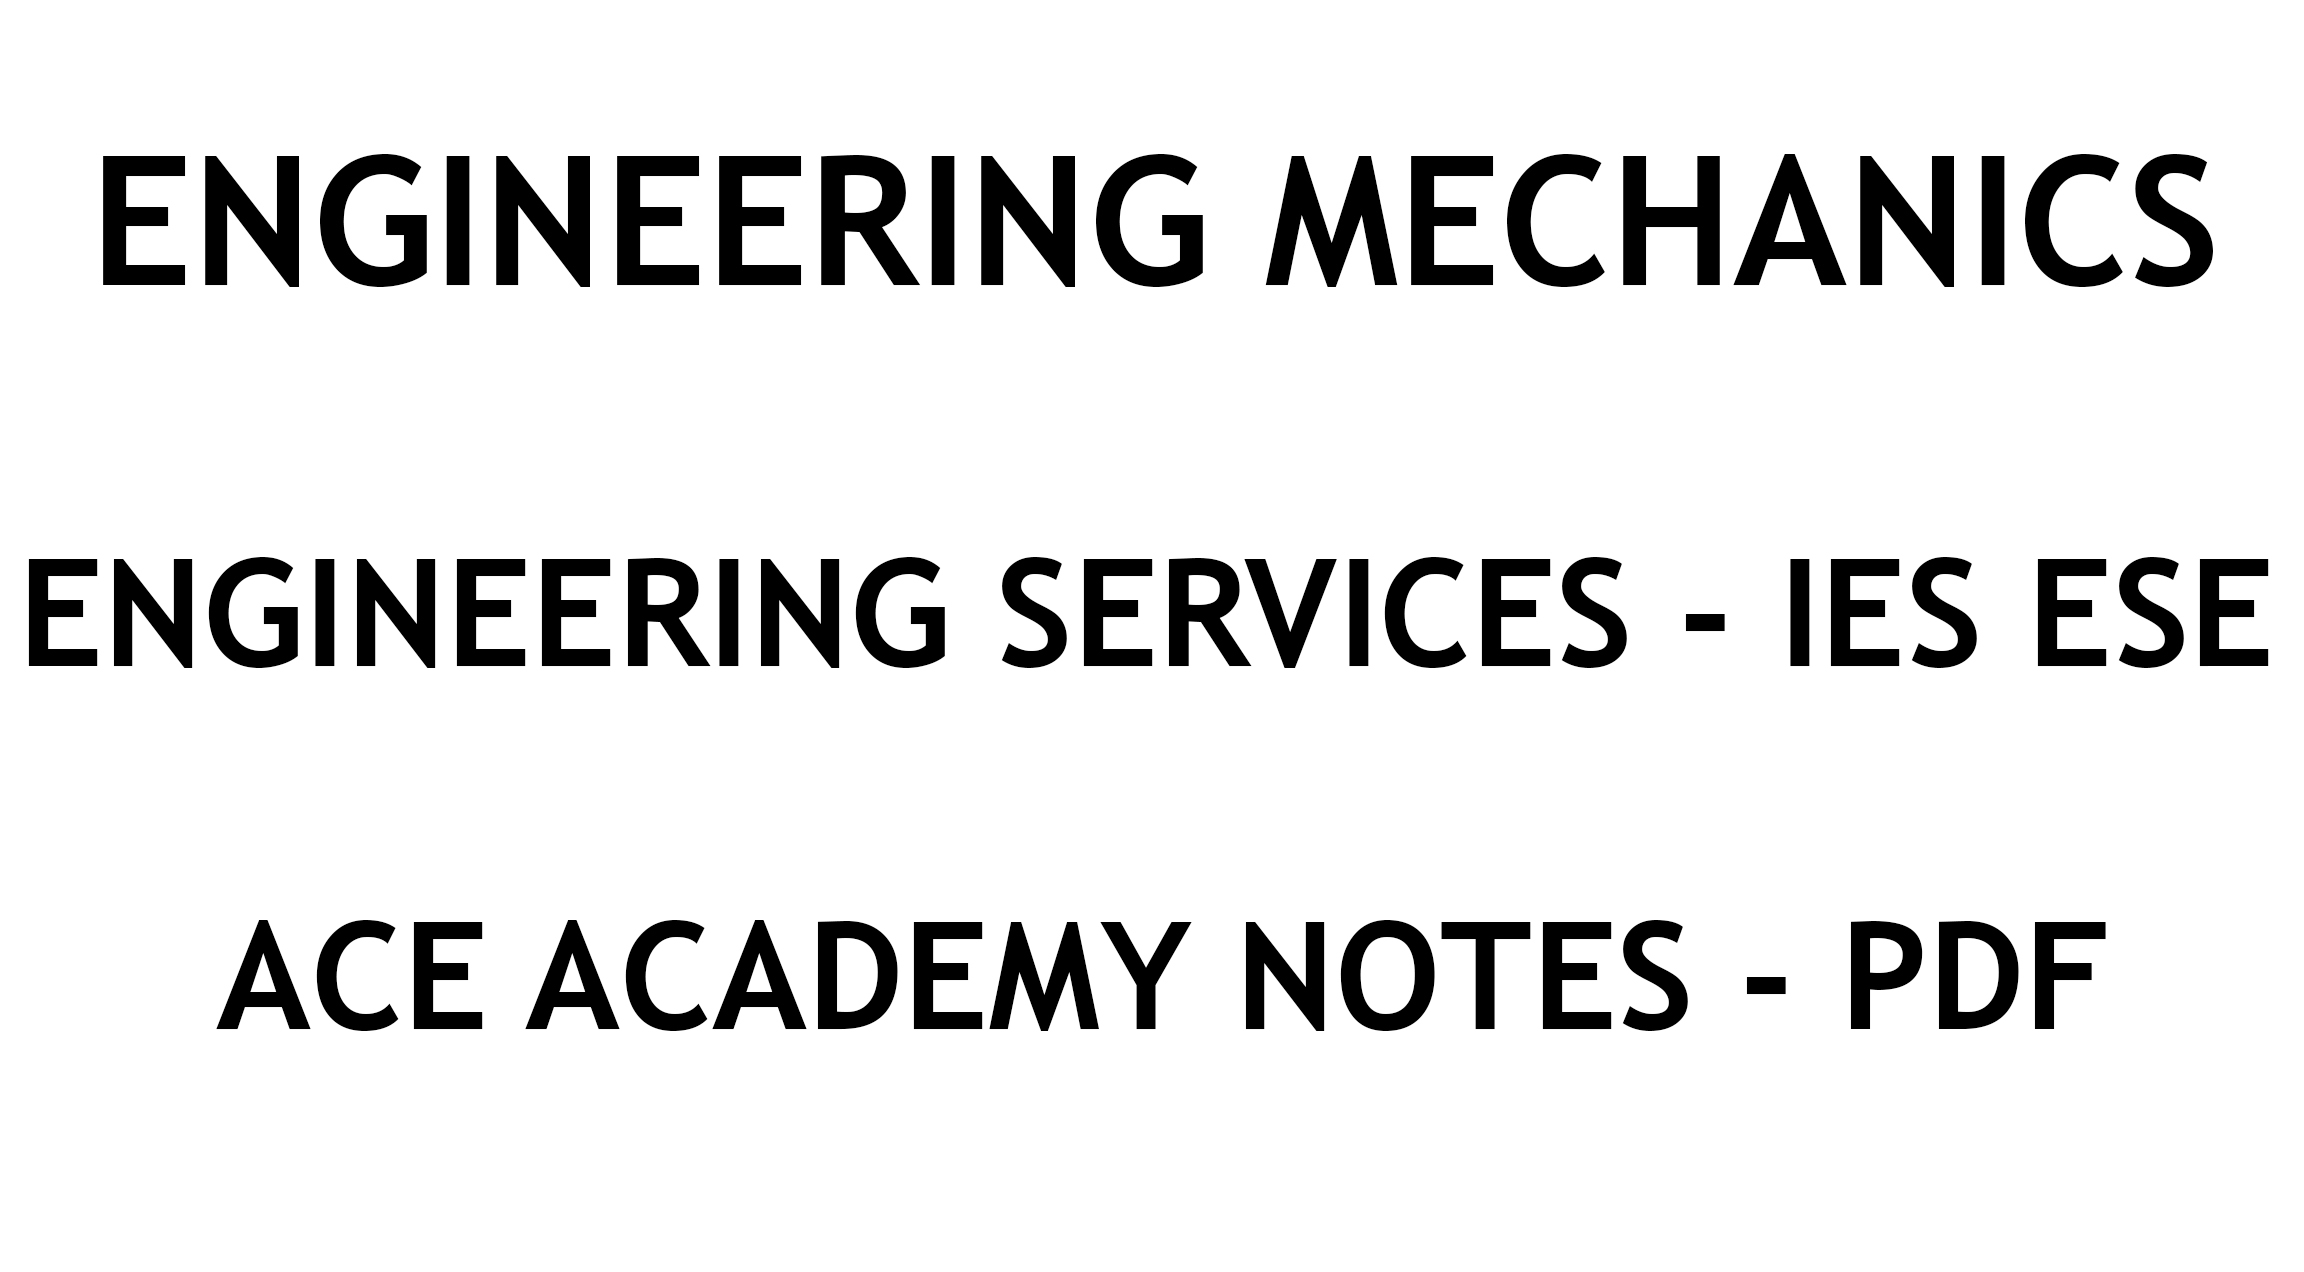 Engineering Mechanics IES ESE Ace Academy Handwritten Notes